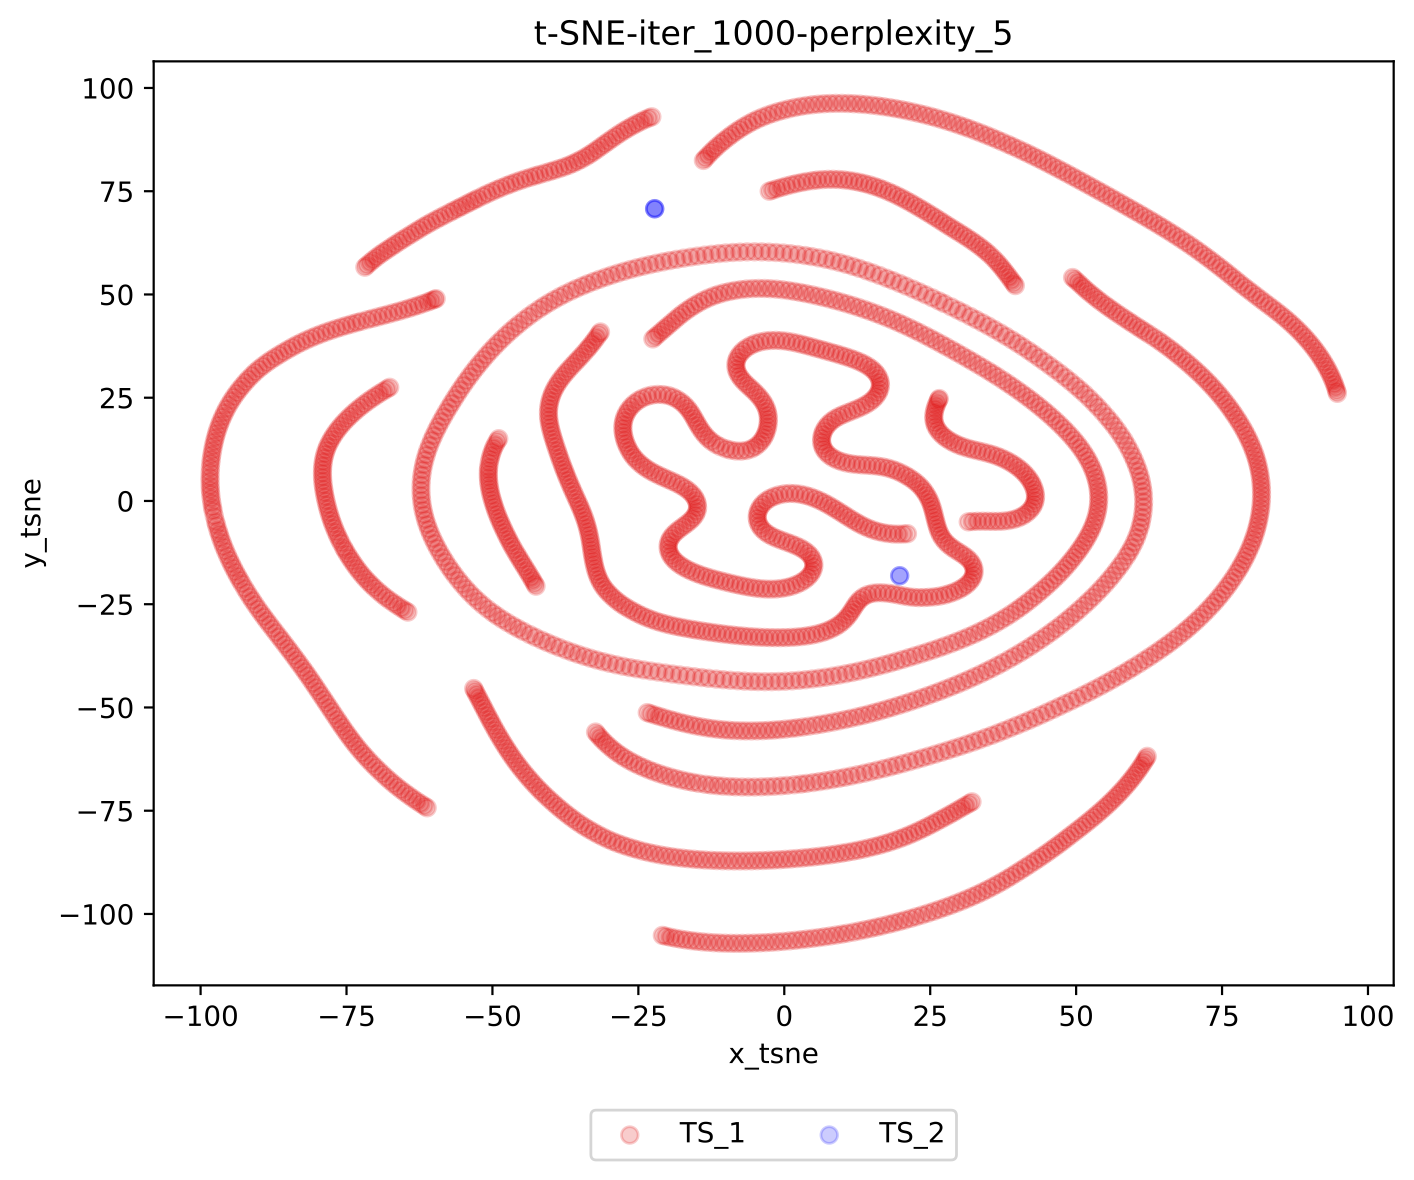 TSNE Figure 1000 iterations 5 perplexity